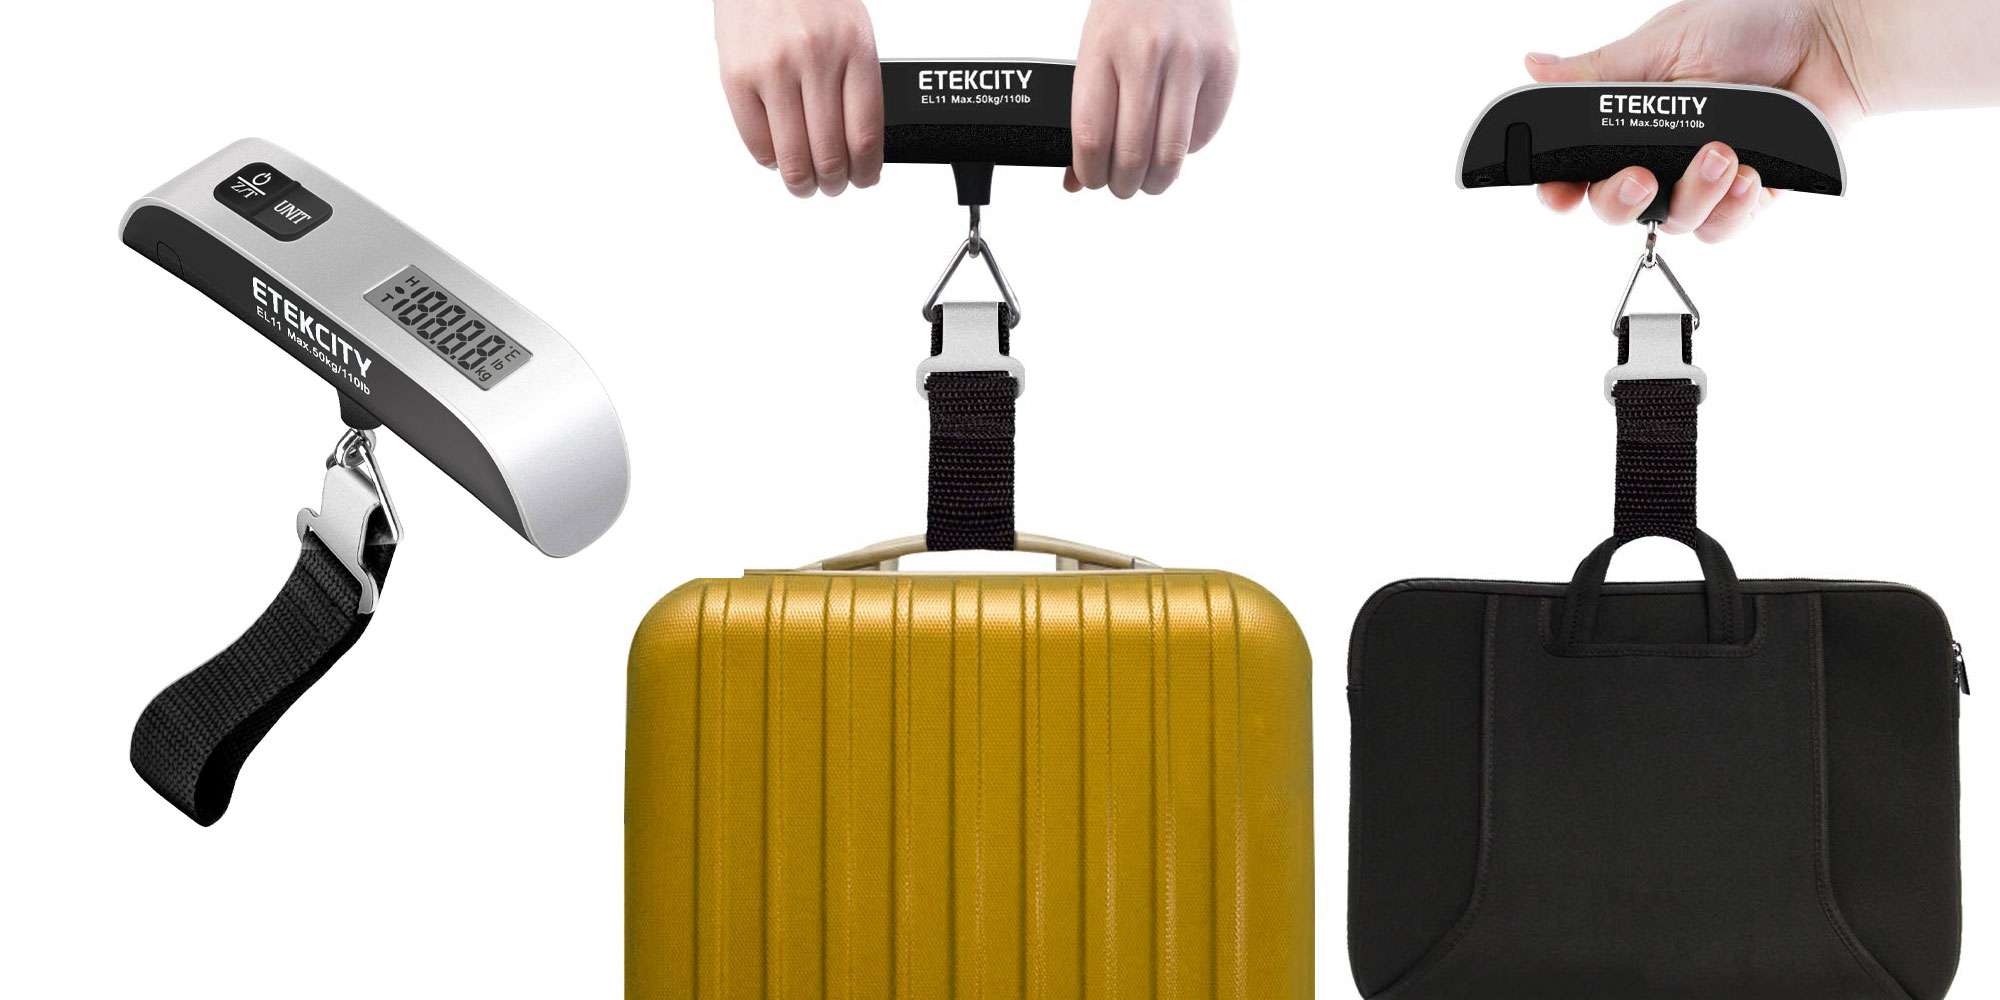 https://9to5toys.com/wp-content/uploads/sites/5/2019/07/Etekcity-Two-Digital-Luggage-Scale-EL11.jpg